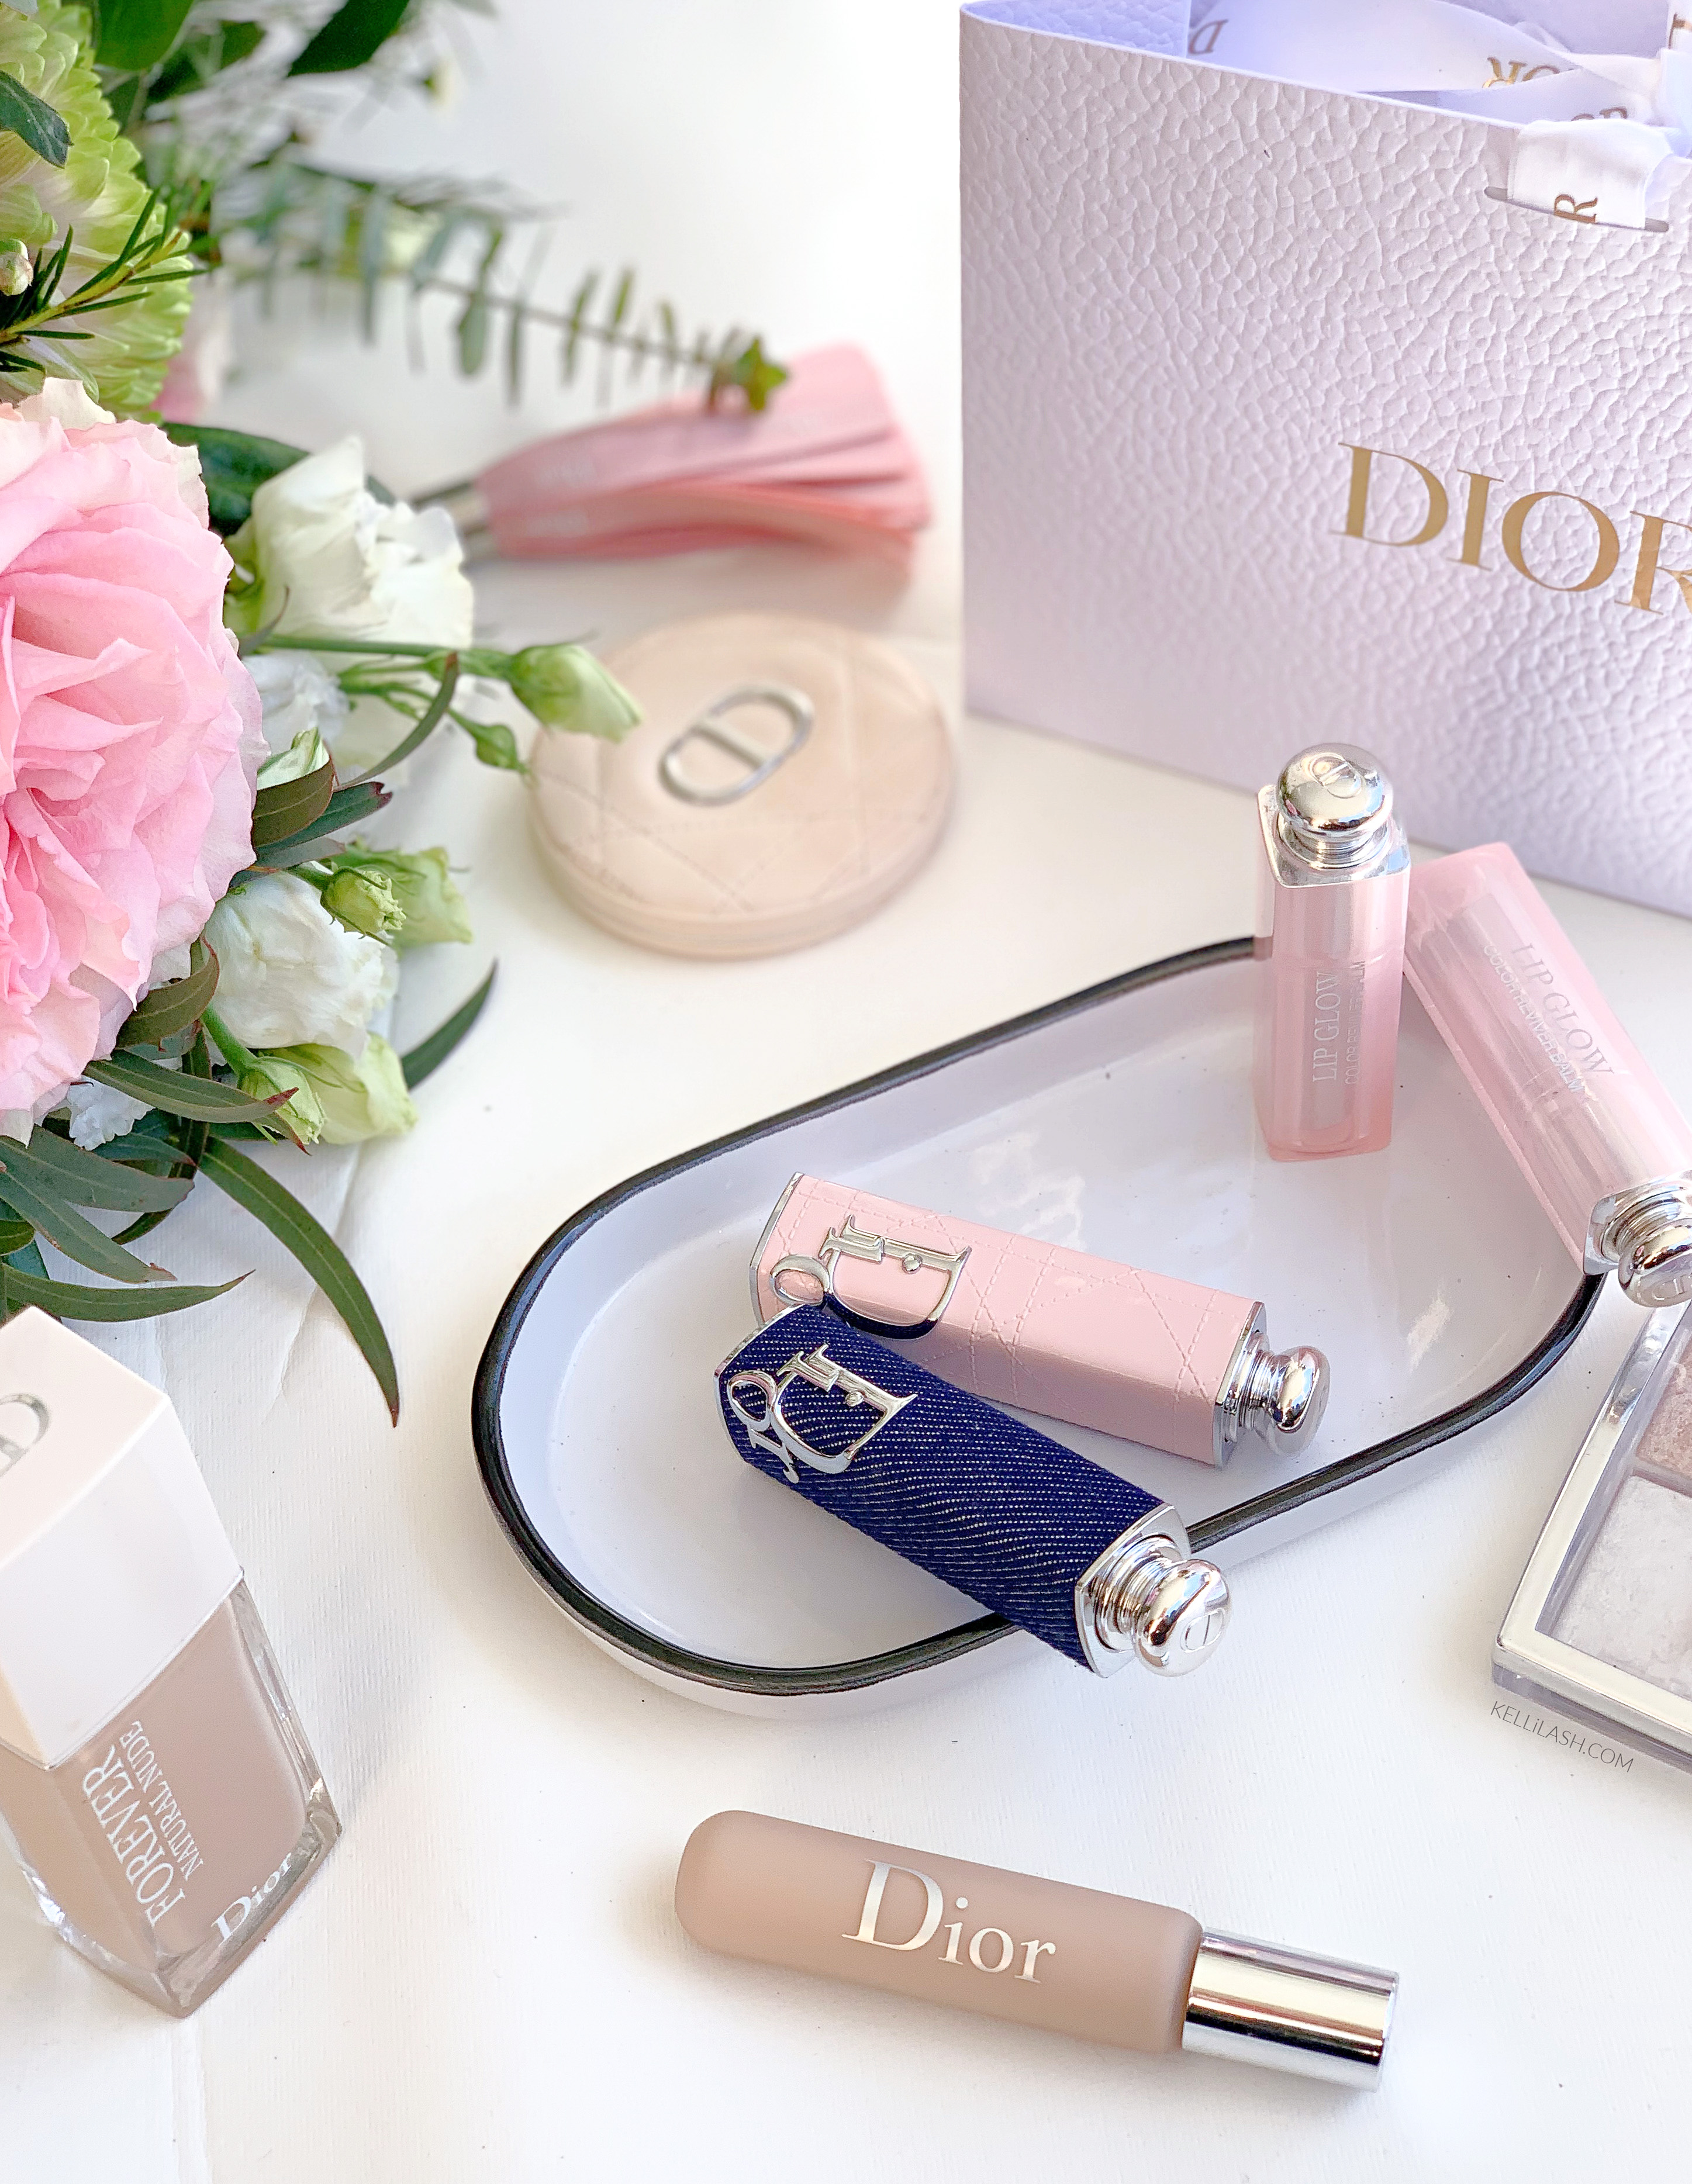 Dior Addict Shine Refillable Lipsticks, The Fashionable Lipstick to Own